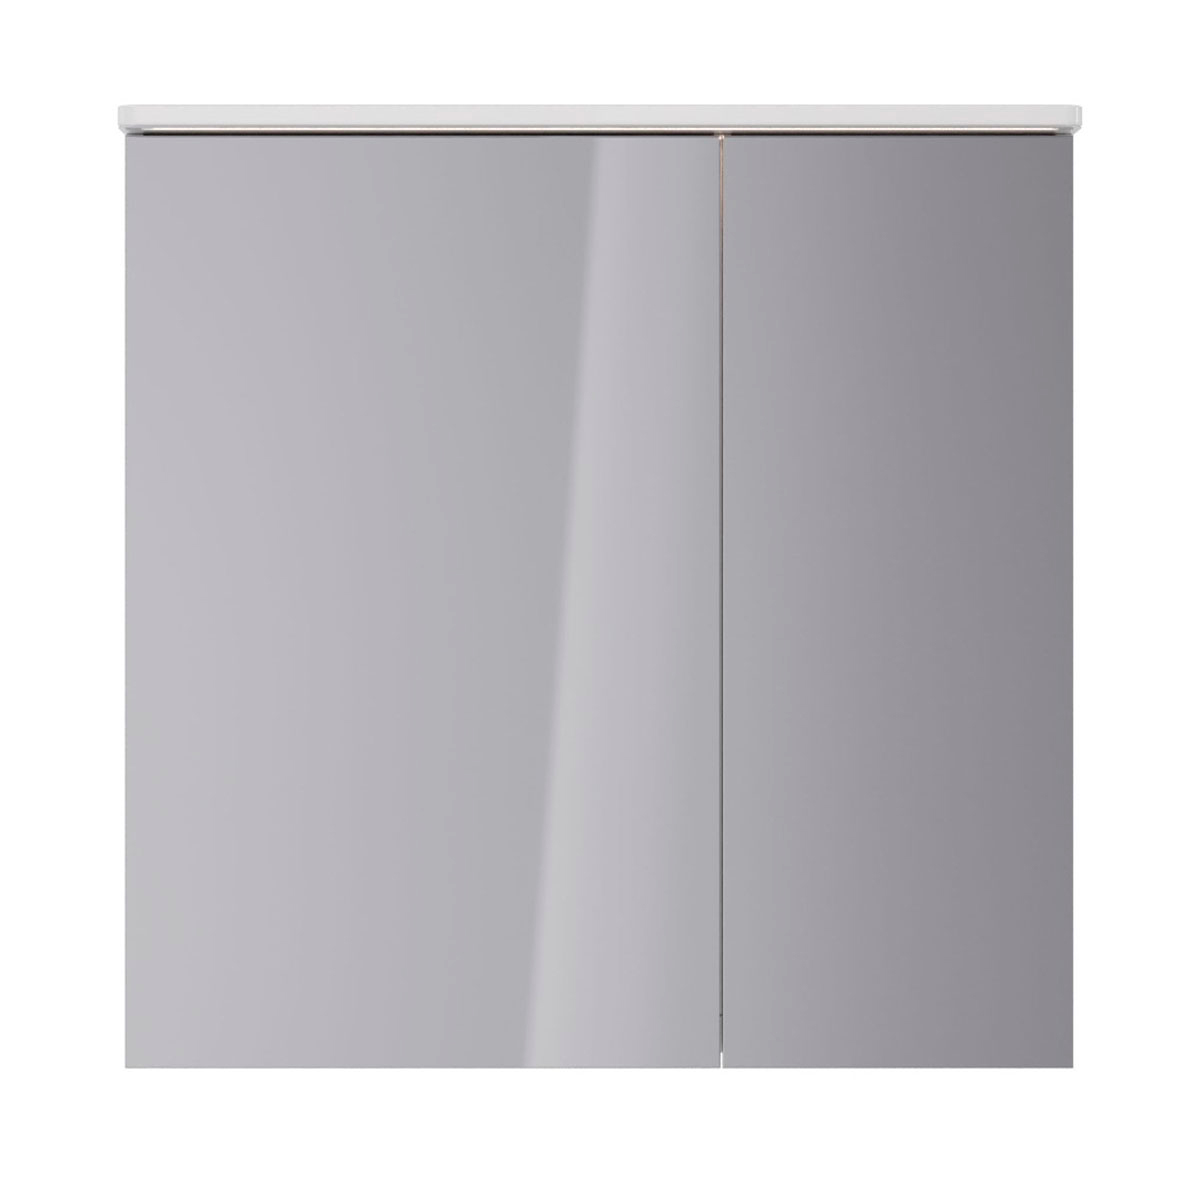 Шкаф зеркальный Lemark ZENON 80х80 см 2-х дверный, с козырьком-подсветкой, с розеткой, цвет корпуса: Белый глянец